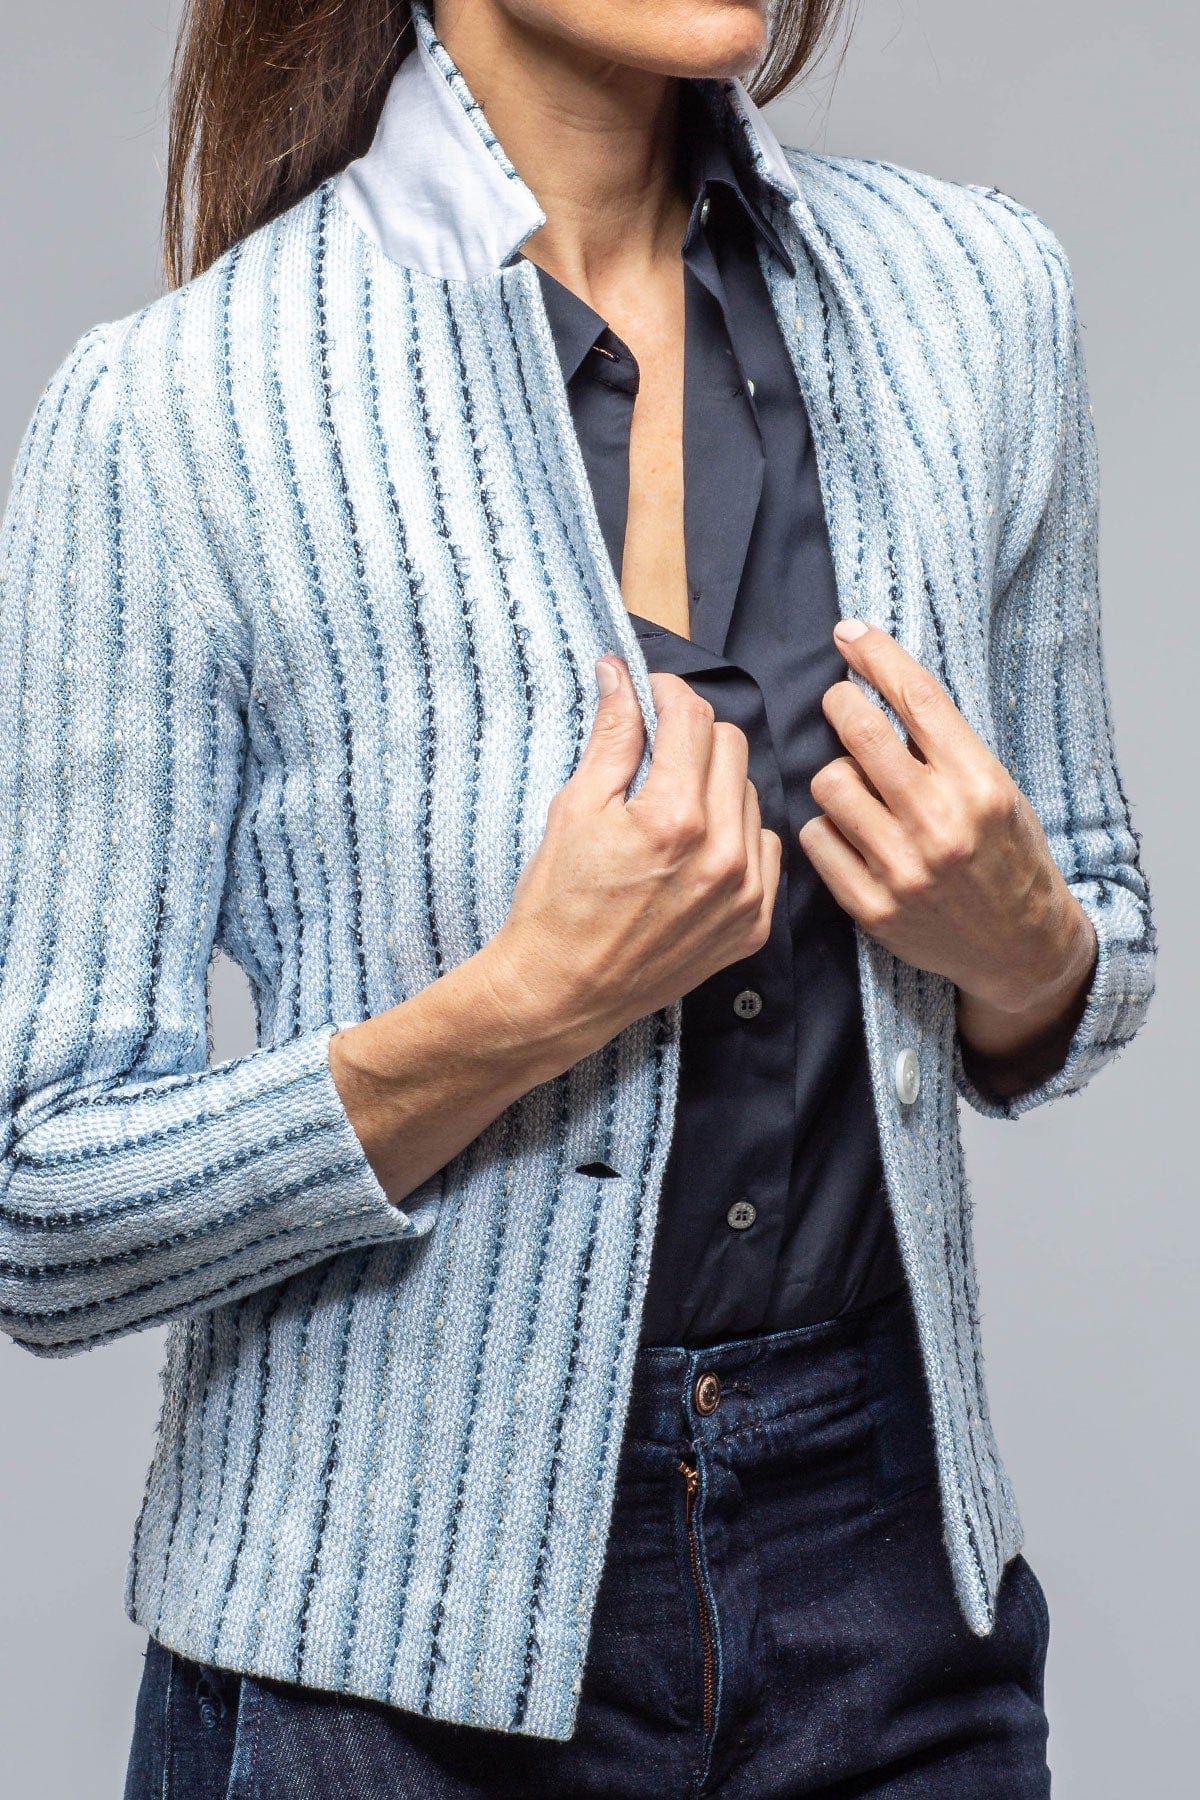 Ponza Striped 2 Button Sweater Jacket In Denim Blues - AXEL'S